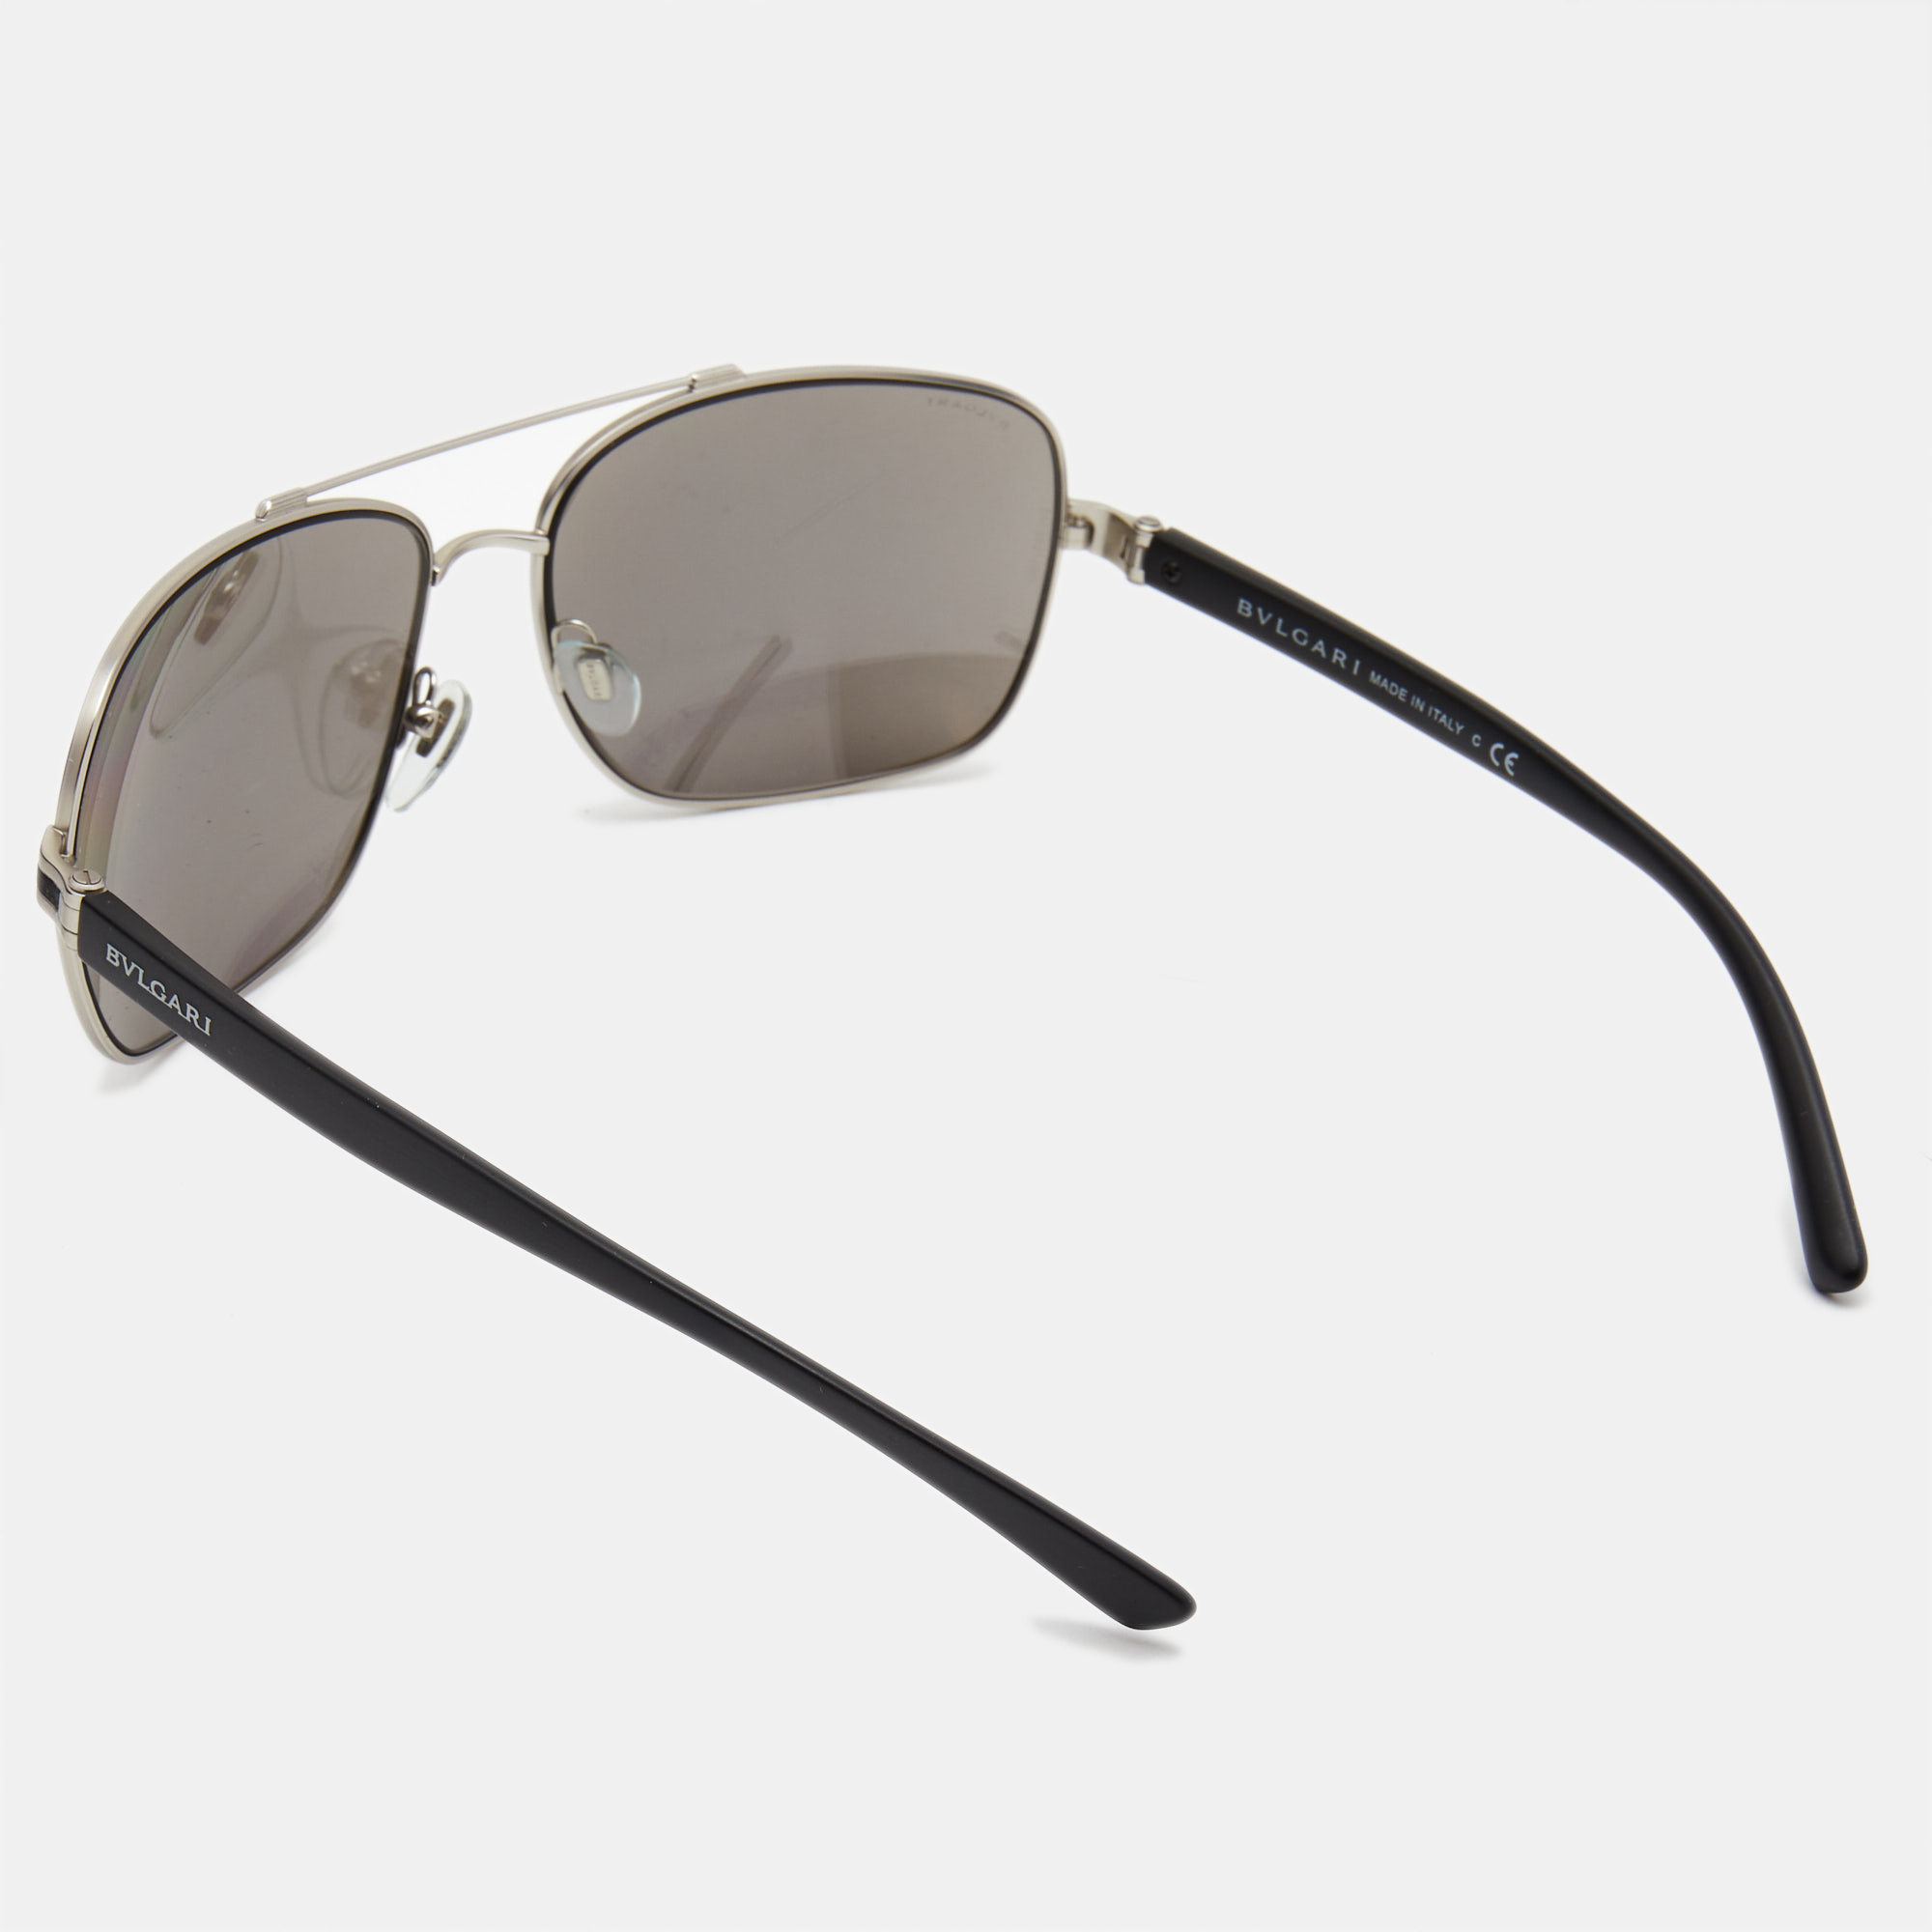 Bvlgari Silver/Black Mirror 5038 Aviator Sunglasses